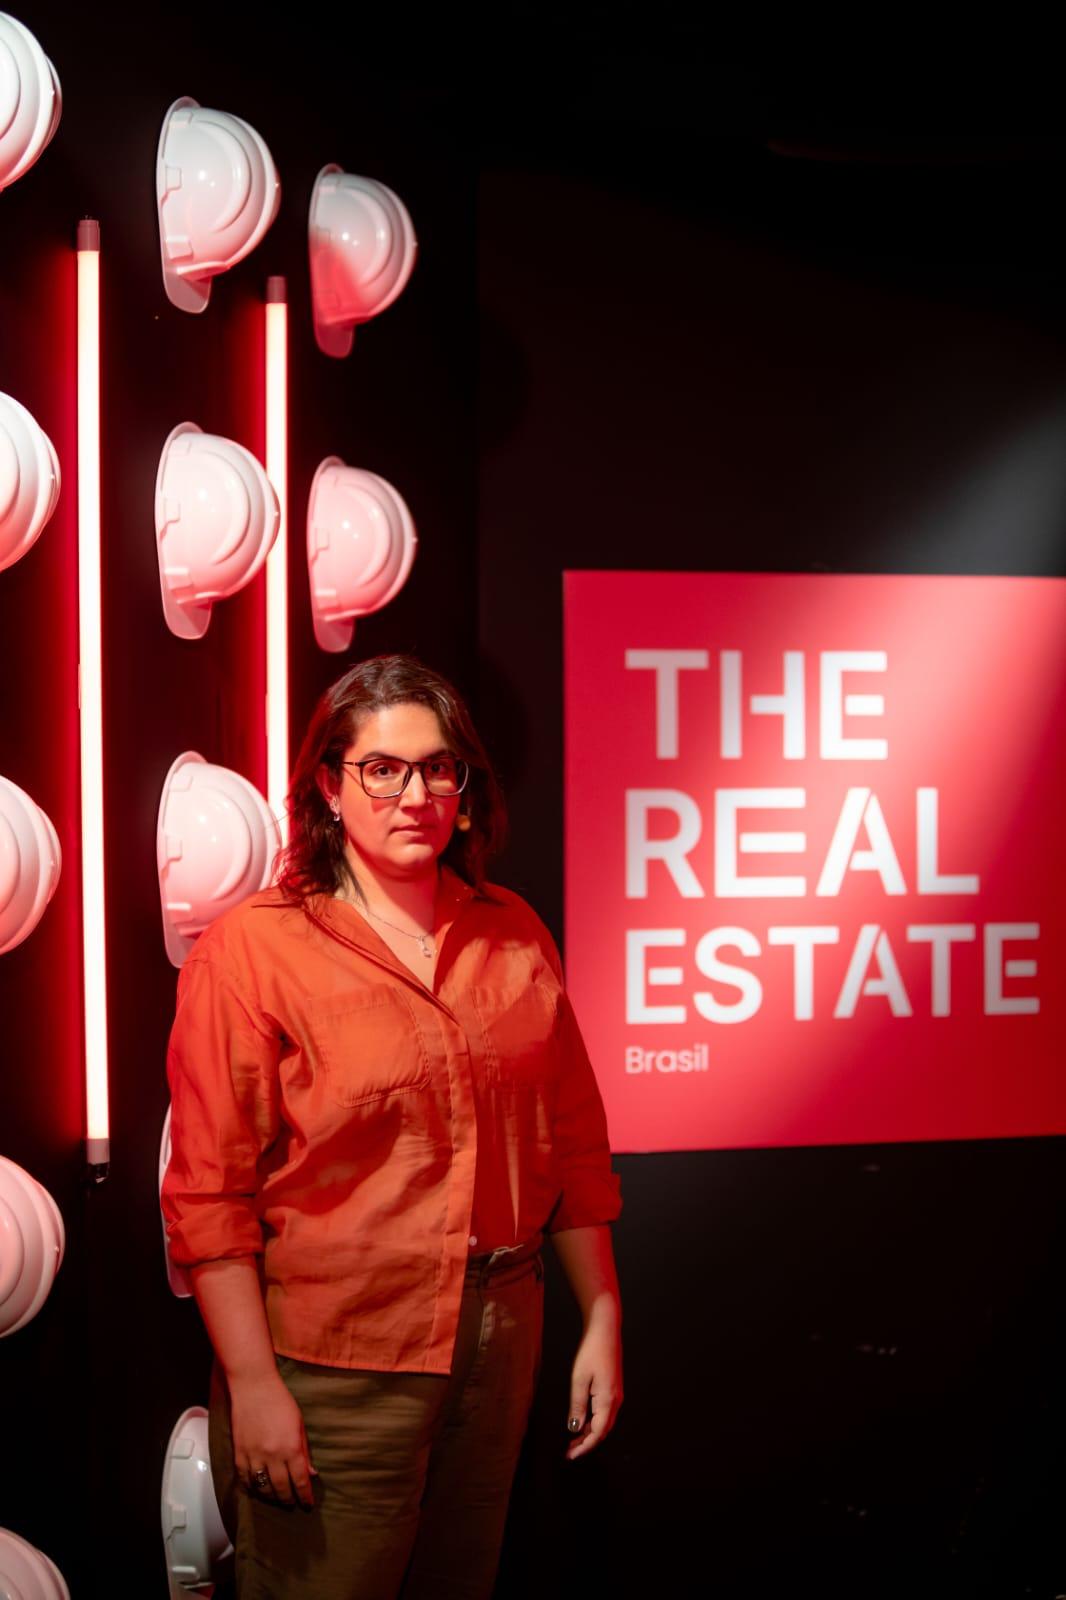 Itatibense participa do reality show ‘The Real Estate Brasil’